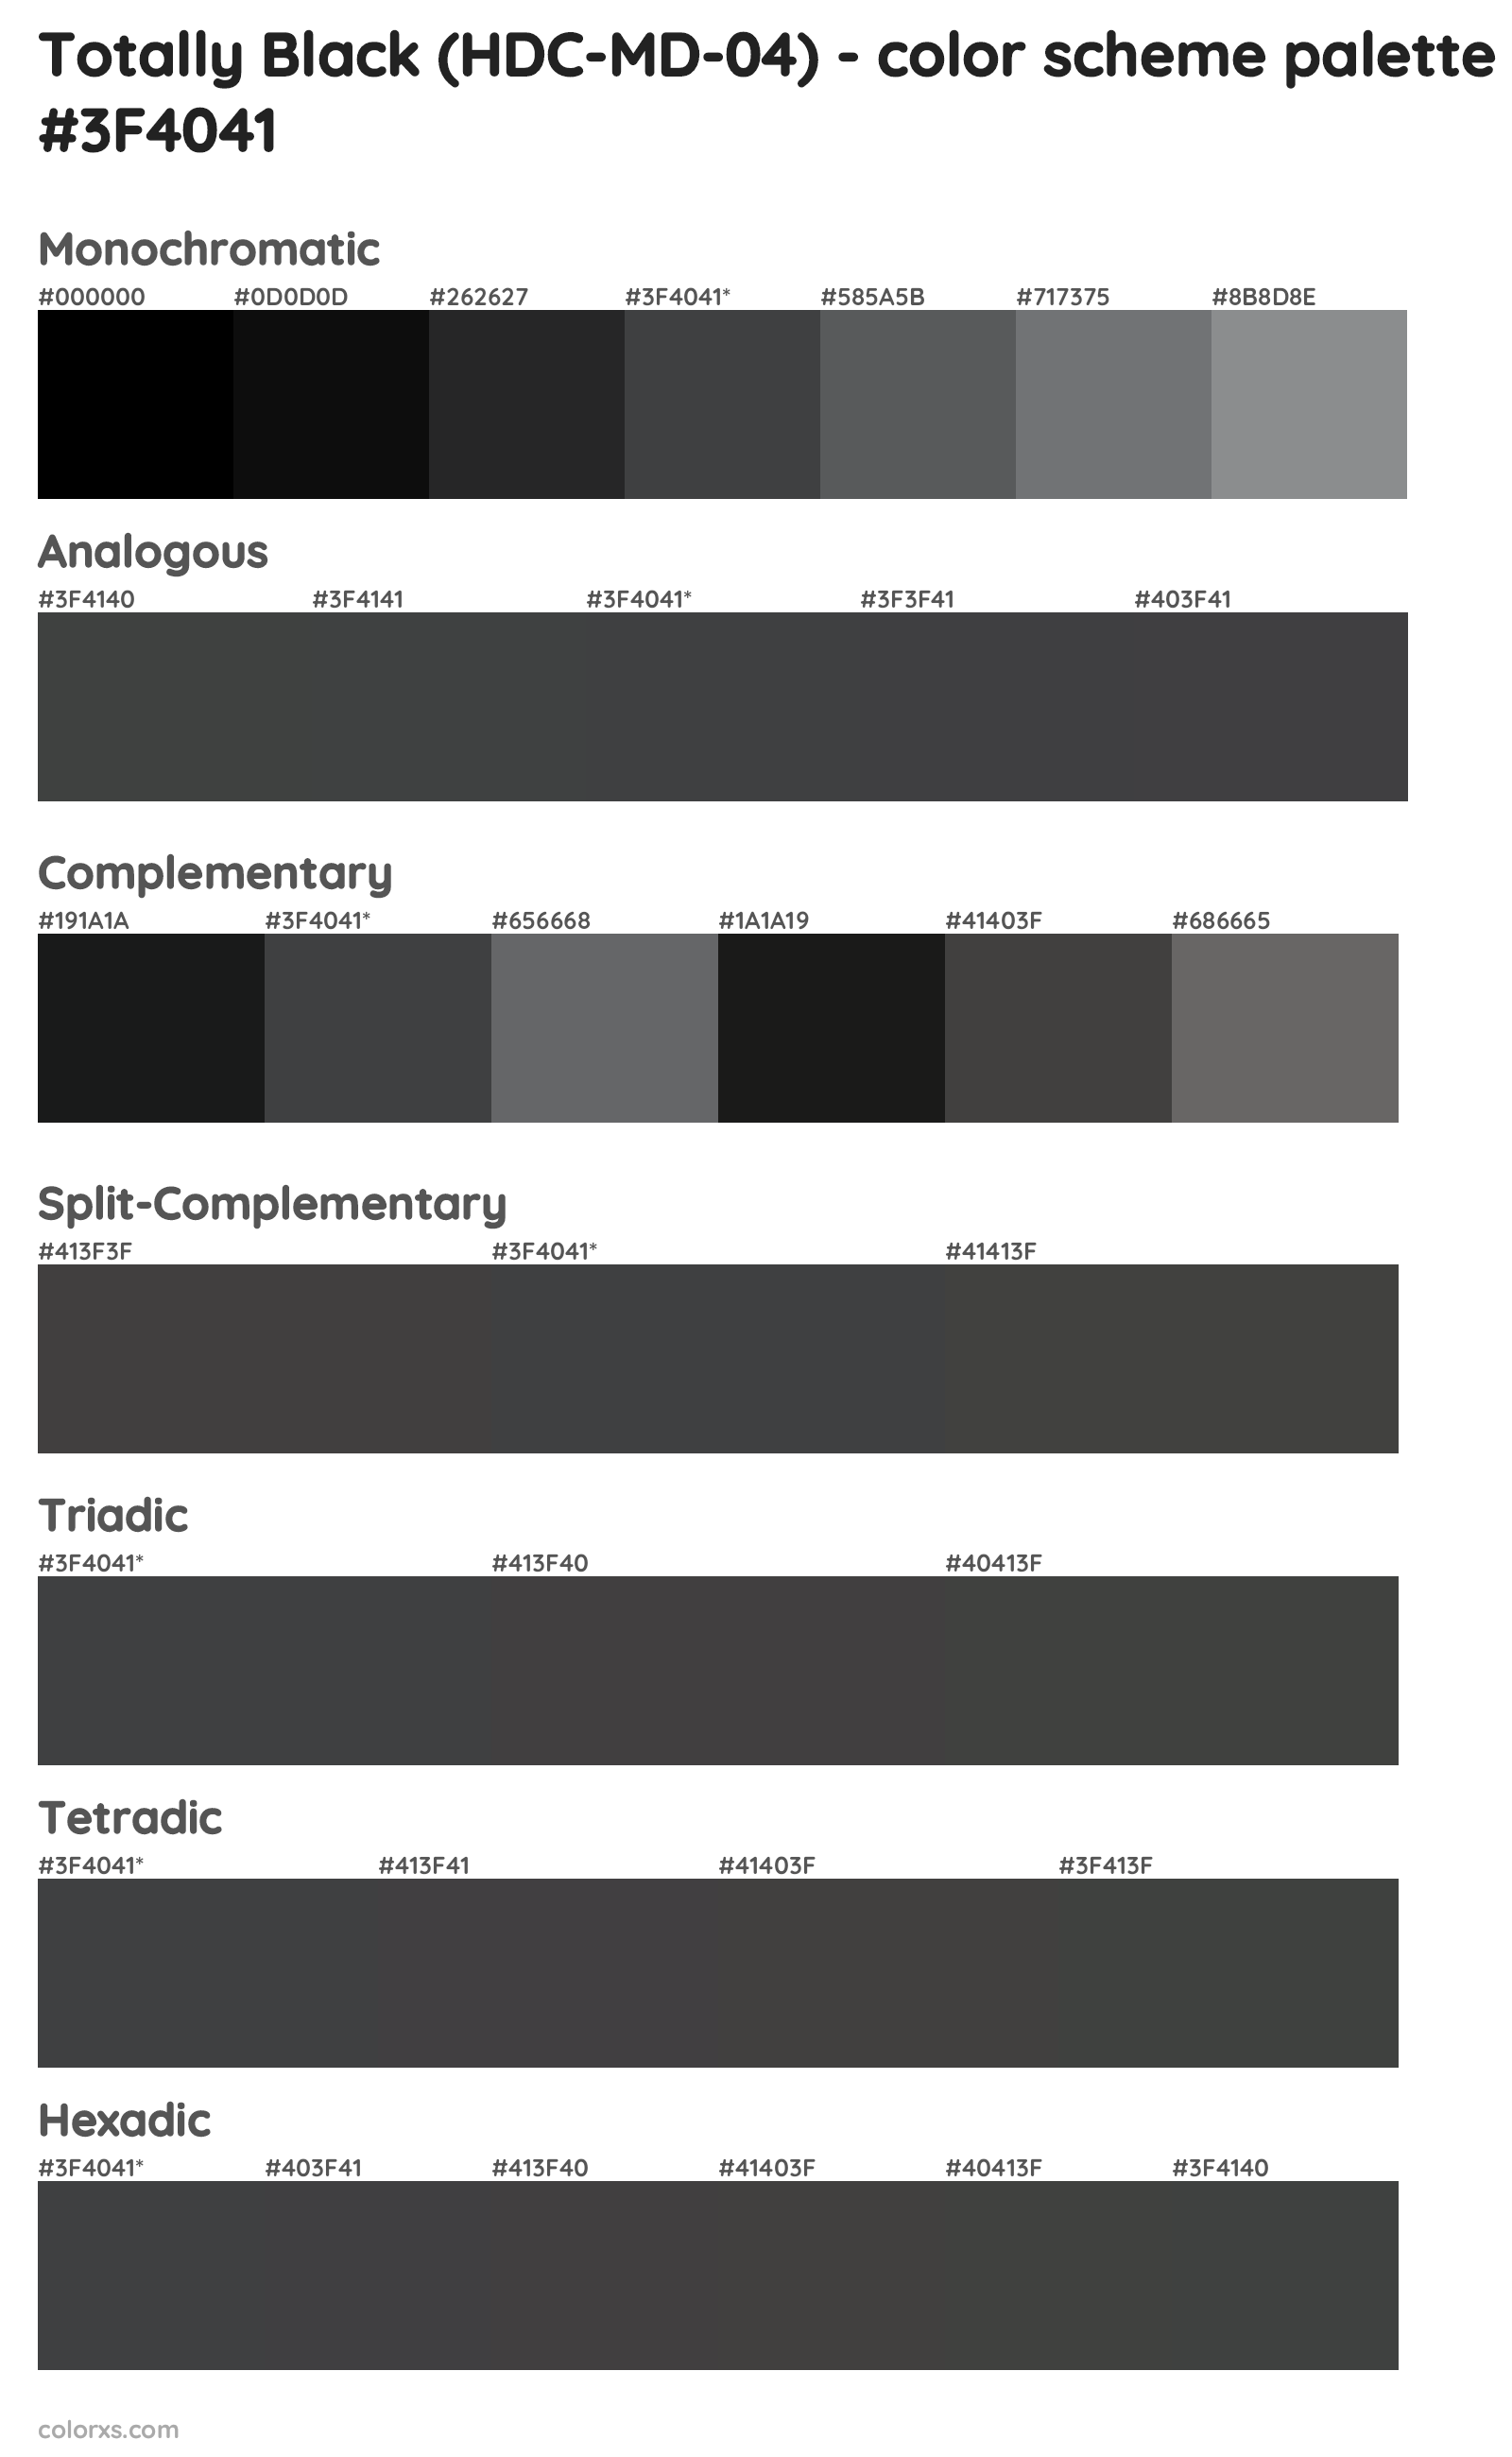 Totally Black (HDC-MD-04) Color Scheme Palettes